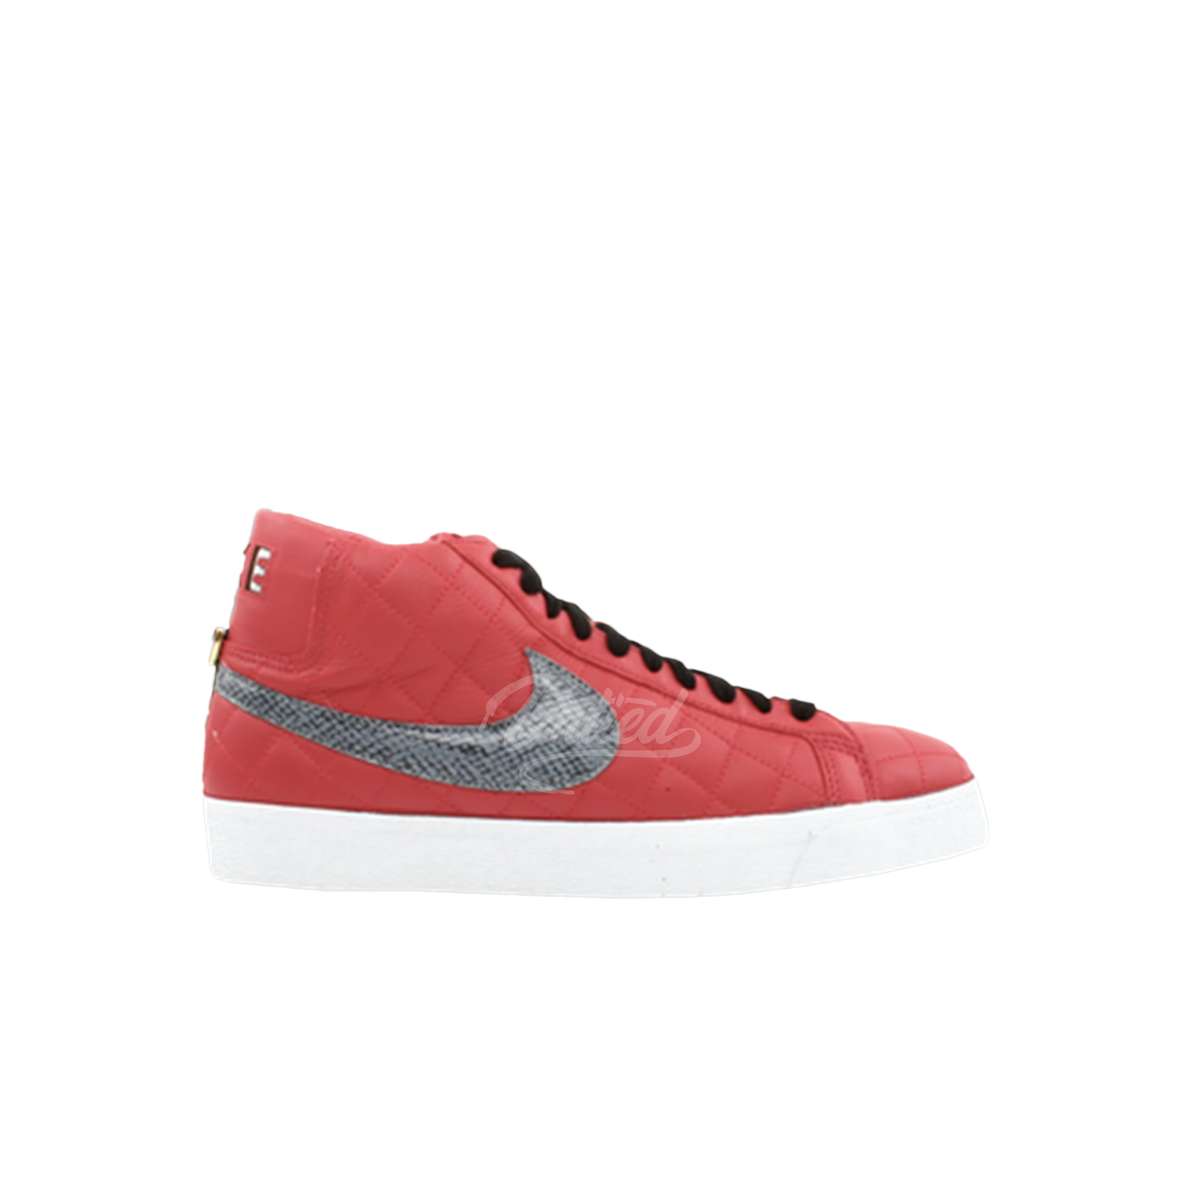 Supreme Nike Blazer SB "Red" (2006)